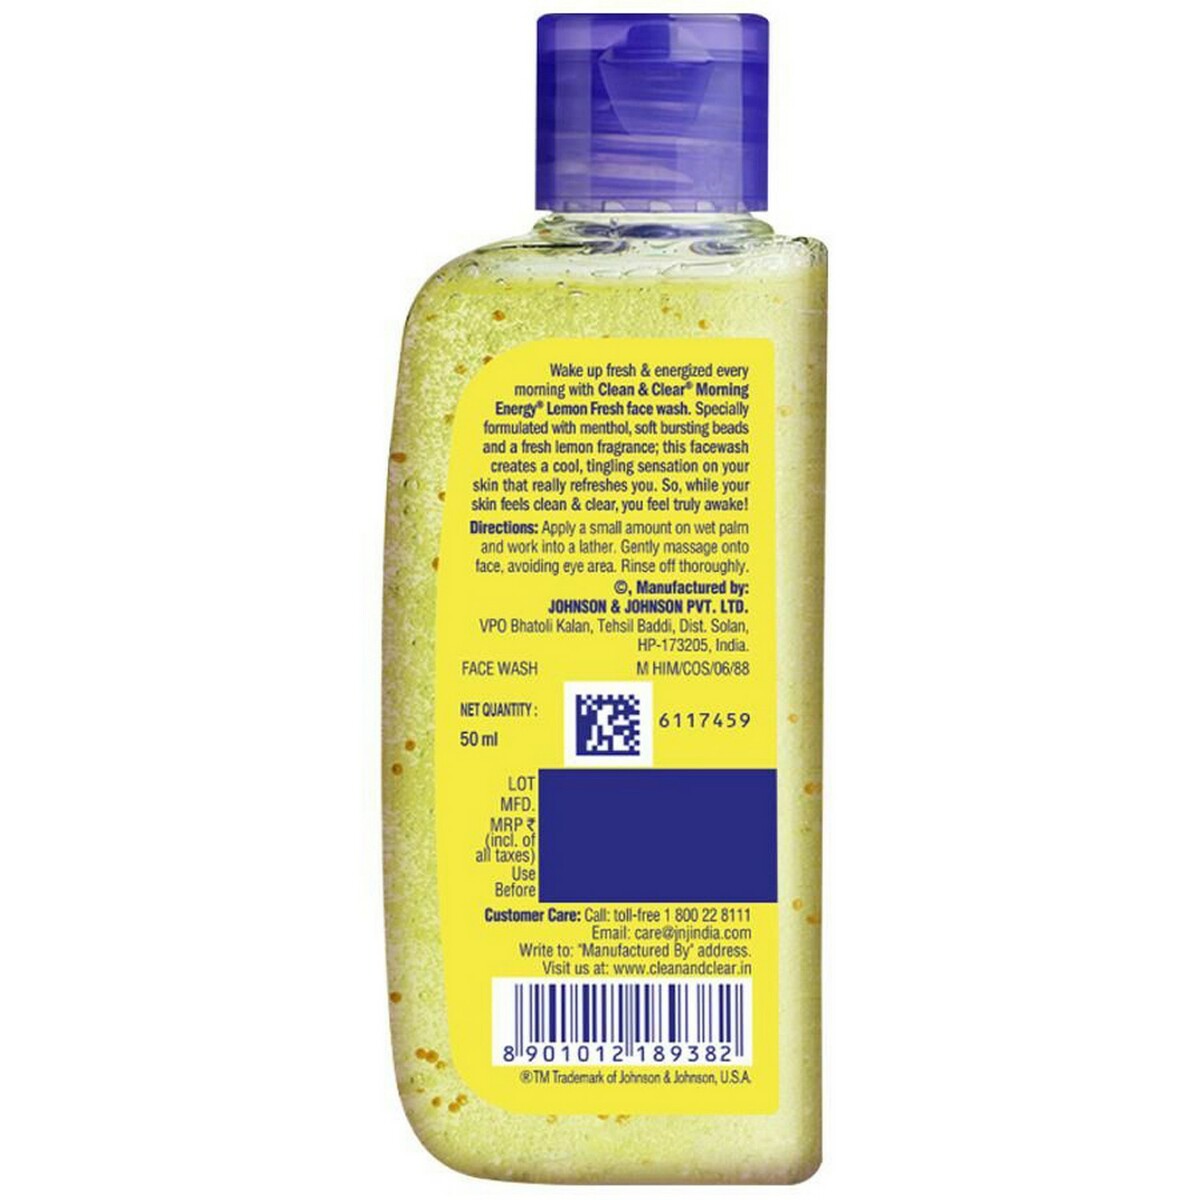 Clean & Clear Face Wash Morning Energy Lemon 50ml